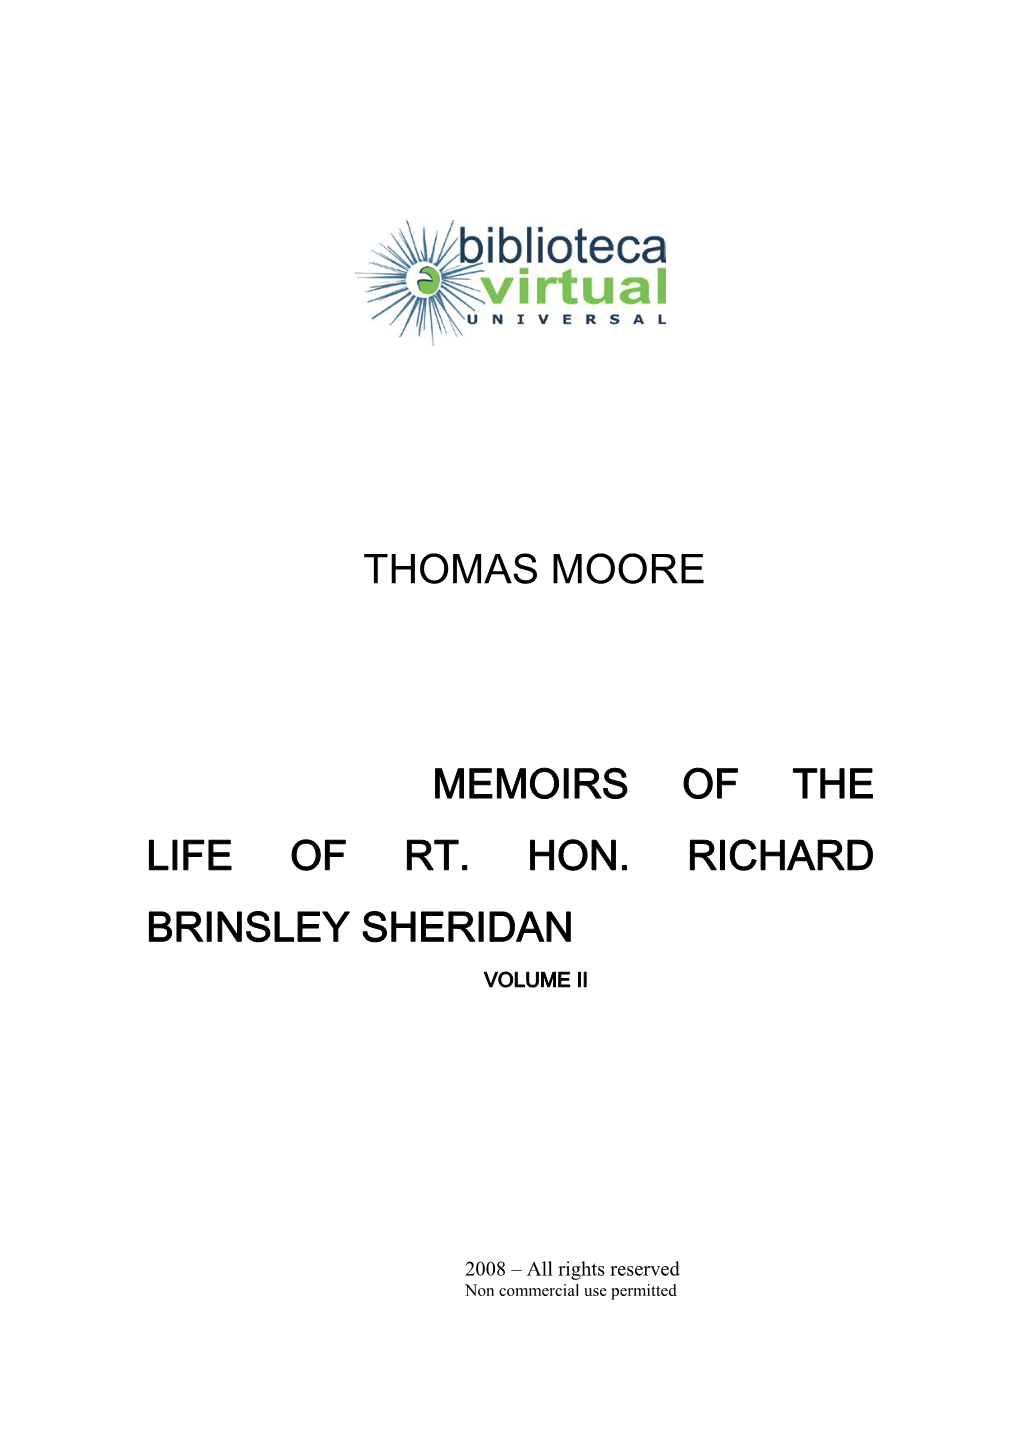 Thomas Moore Memoirs of the Life of Rt. Hon. Richard